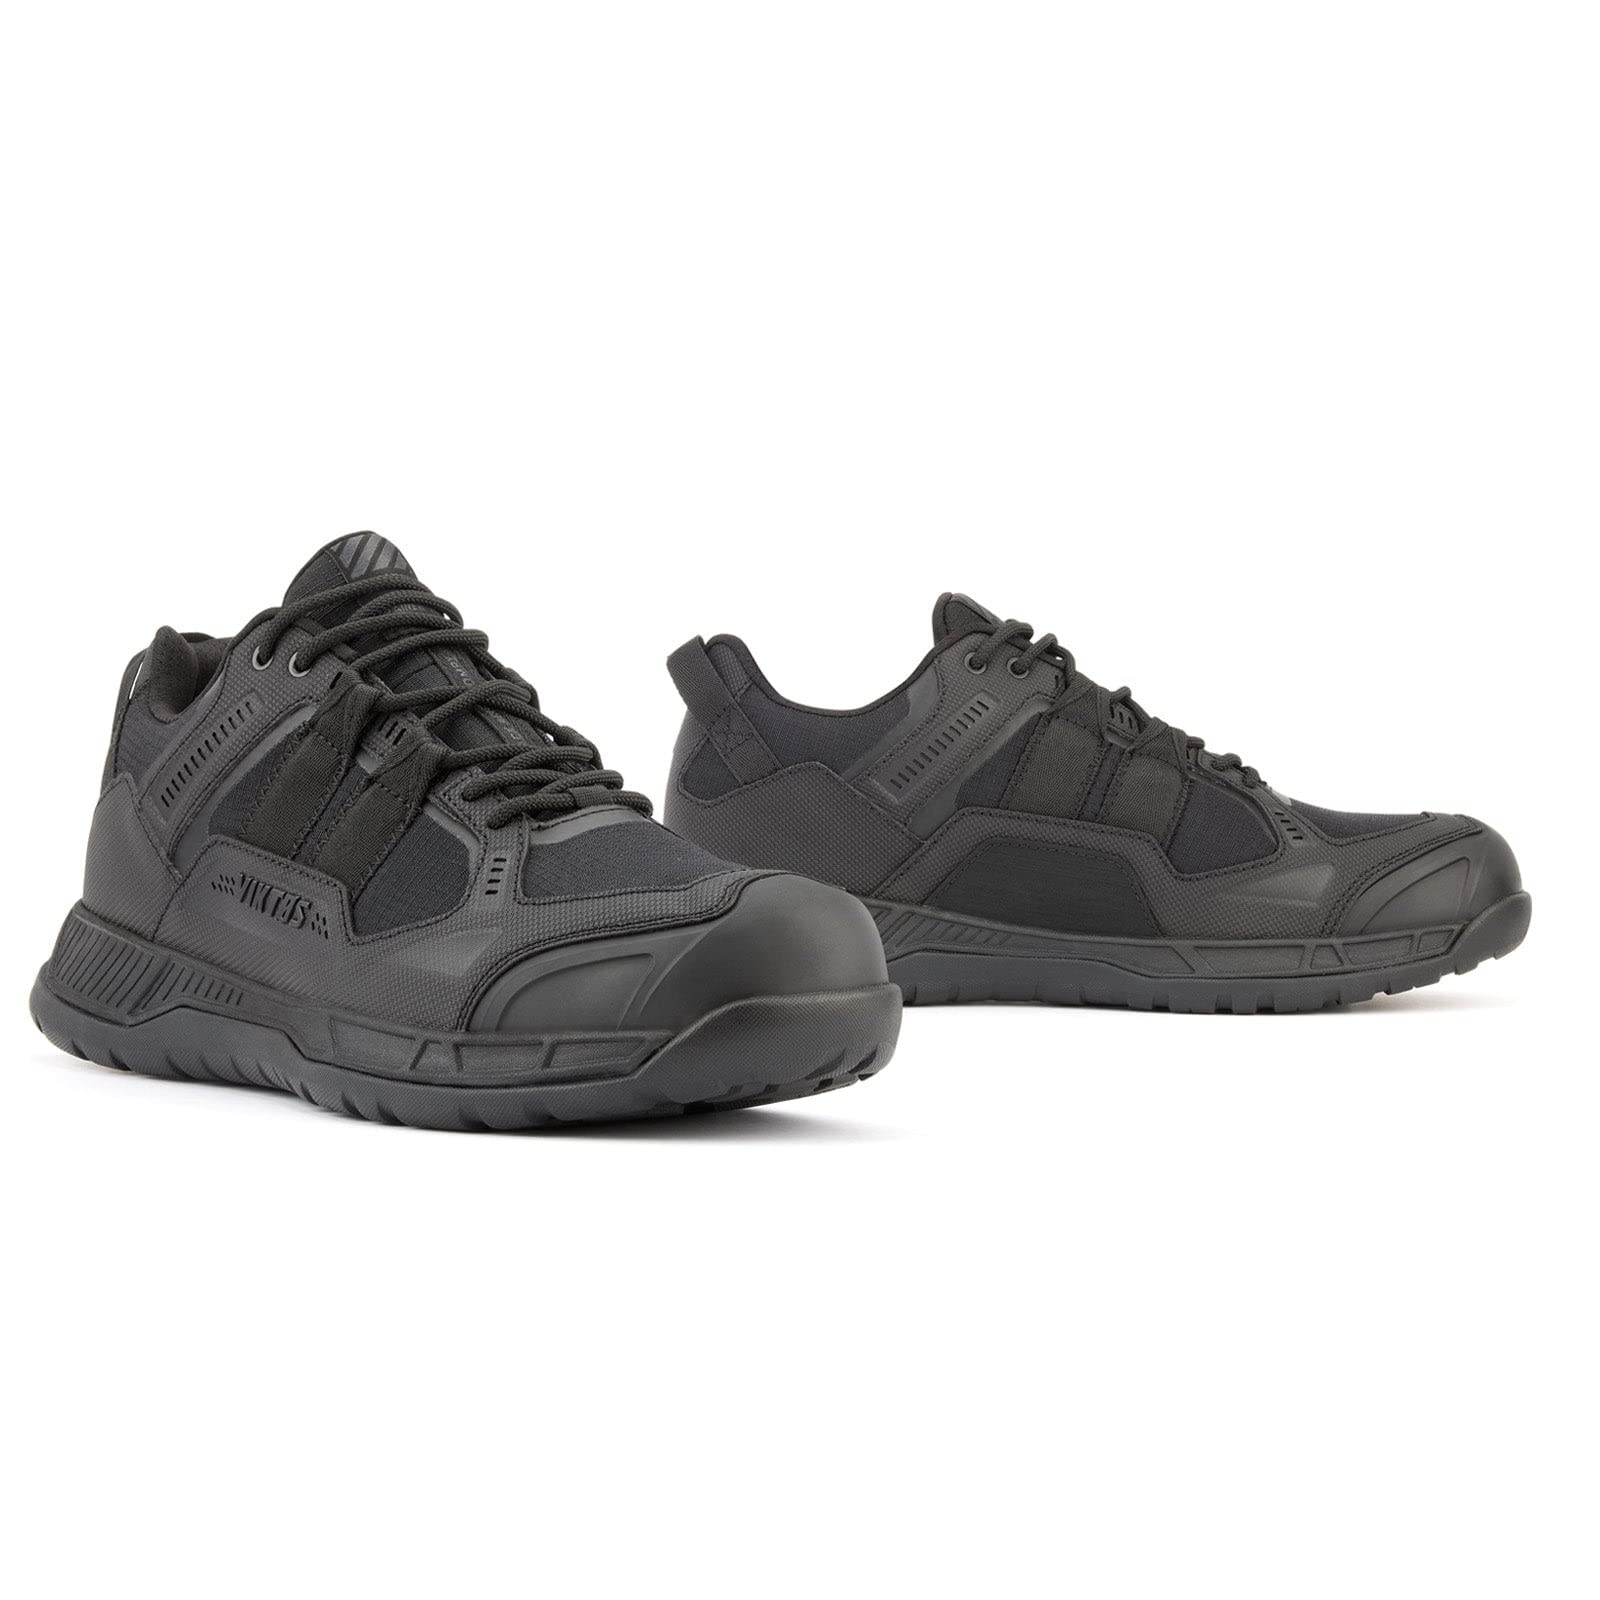 VIKTOS Men's Range Trainer XC Shoe Sneaker, Black, Size: 10.5